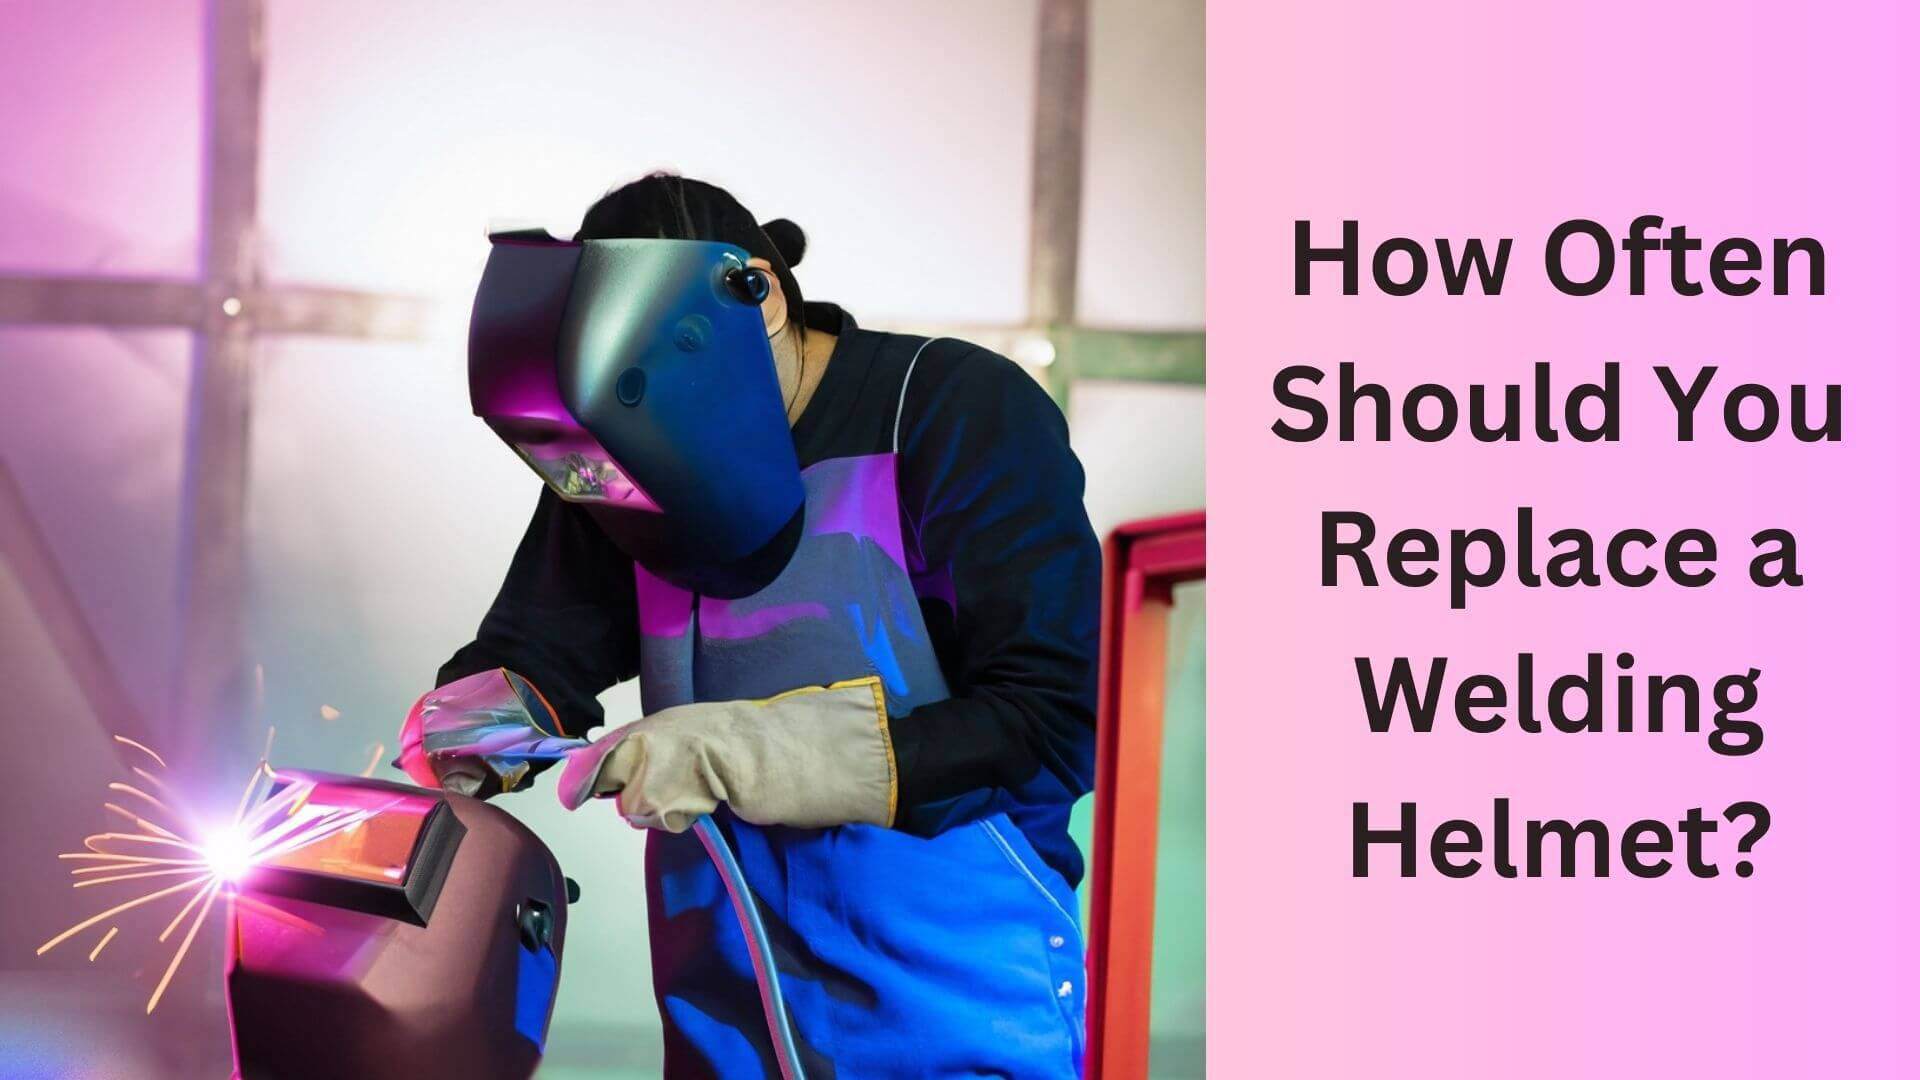 How Often Should You Replace a Welding Helmet?